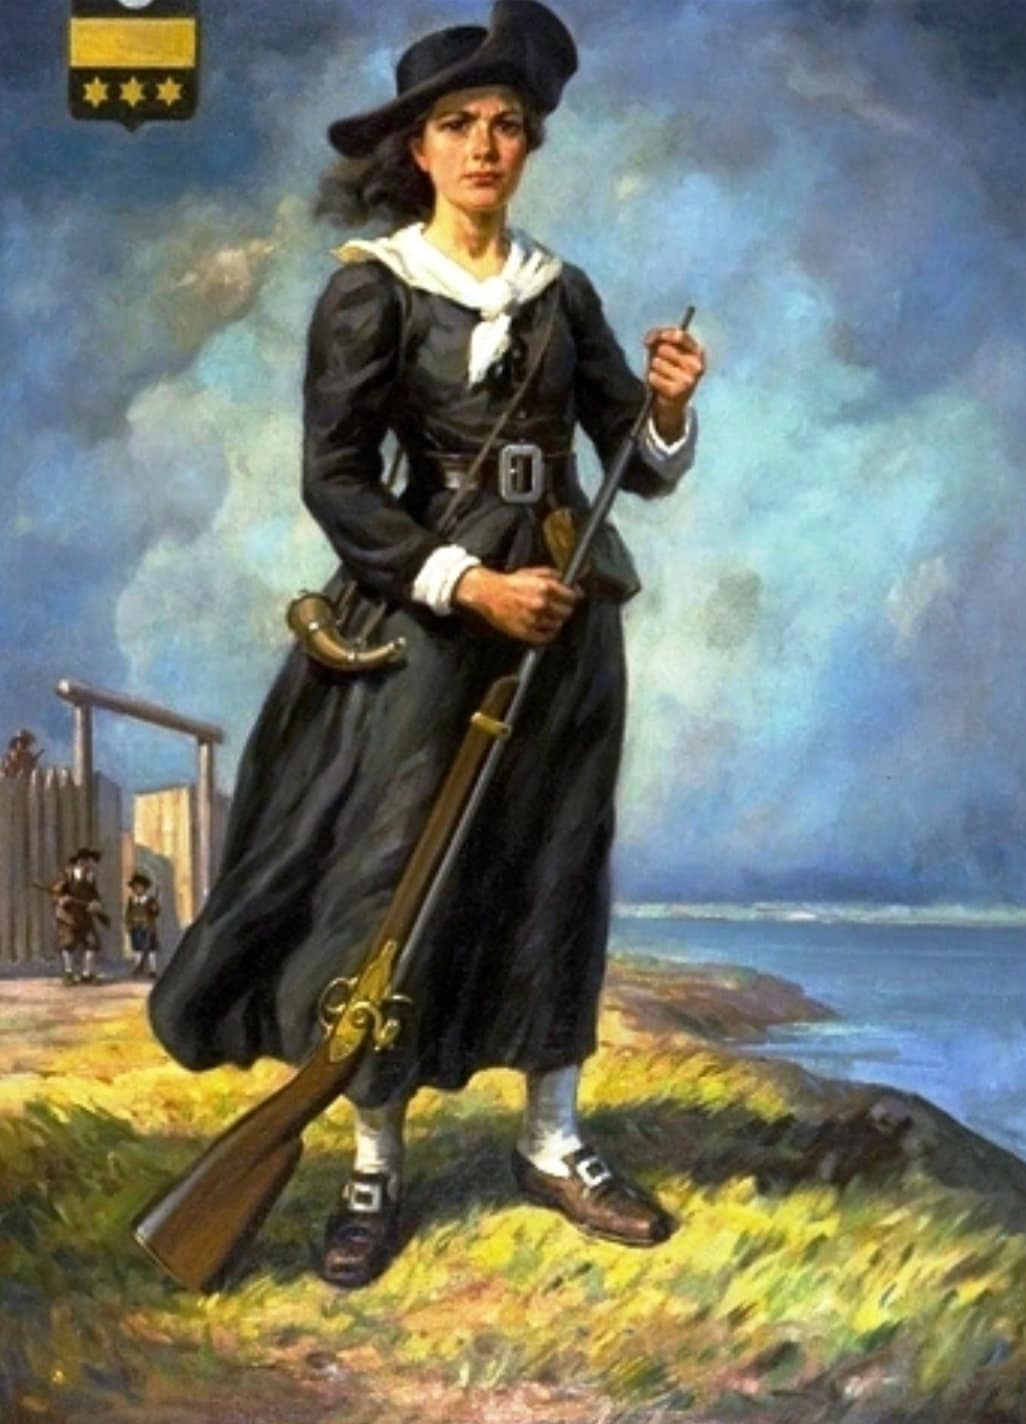 Marie-Madeleine Jarret de Verchères: The Brave Heroine of New France Children's Costume